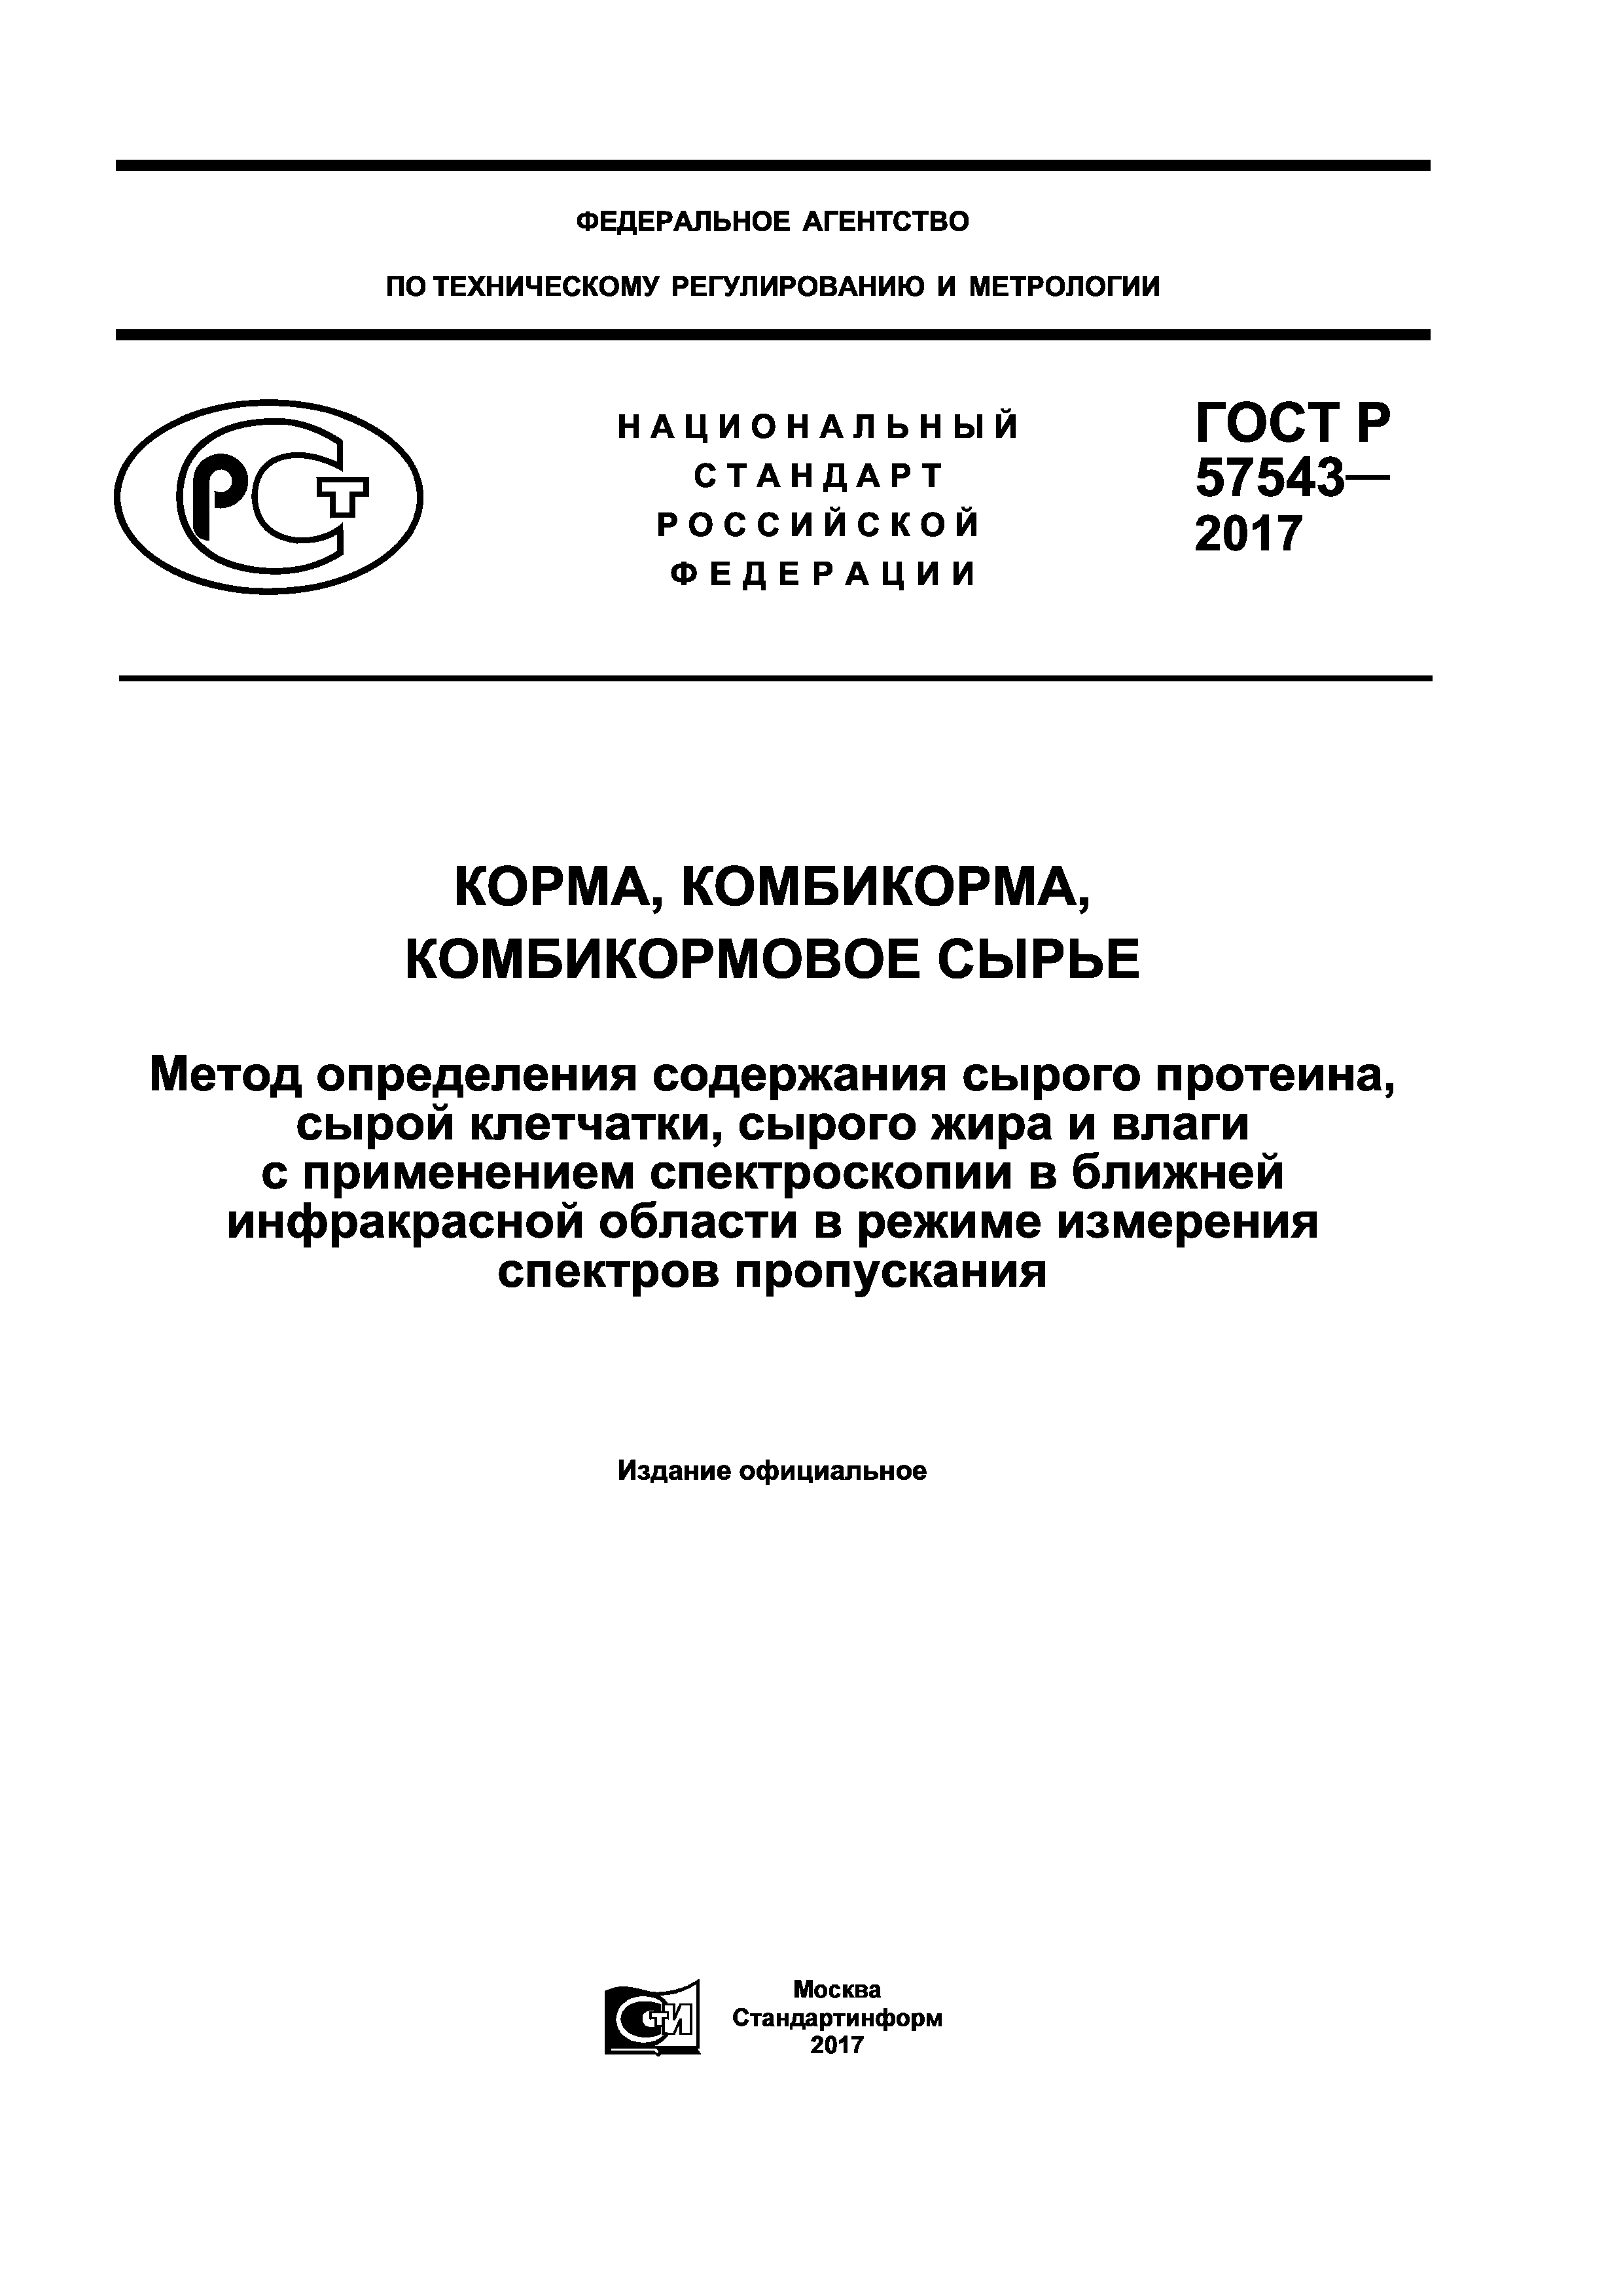 ГОСТ Р 57543-2017